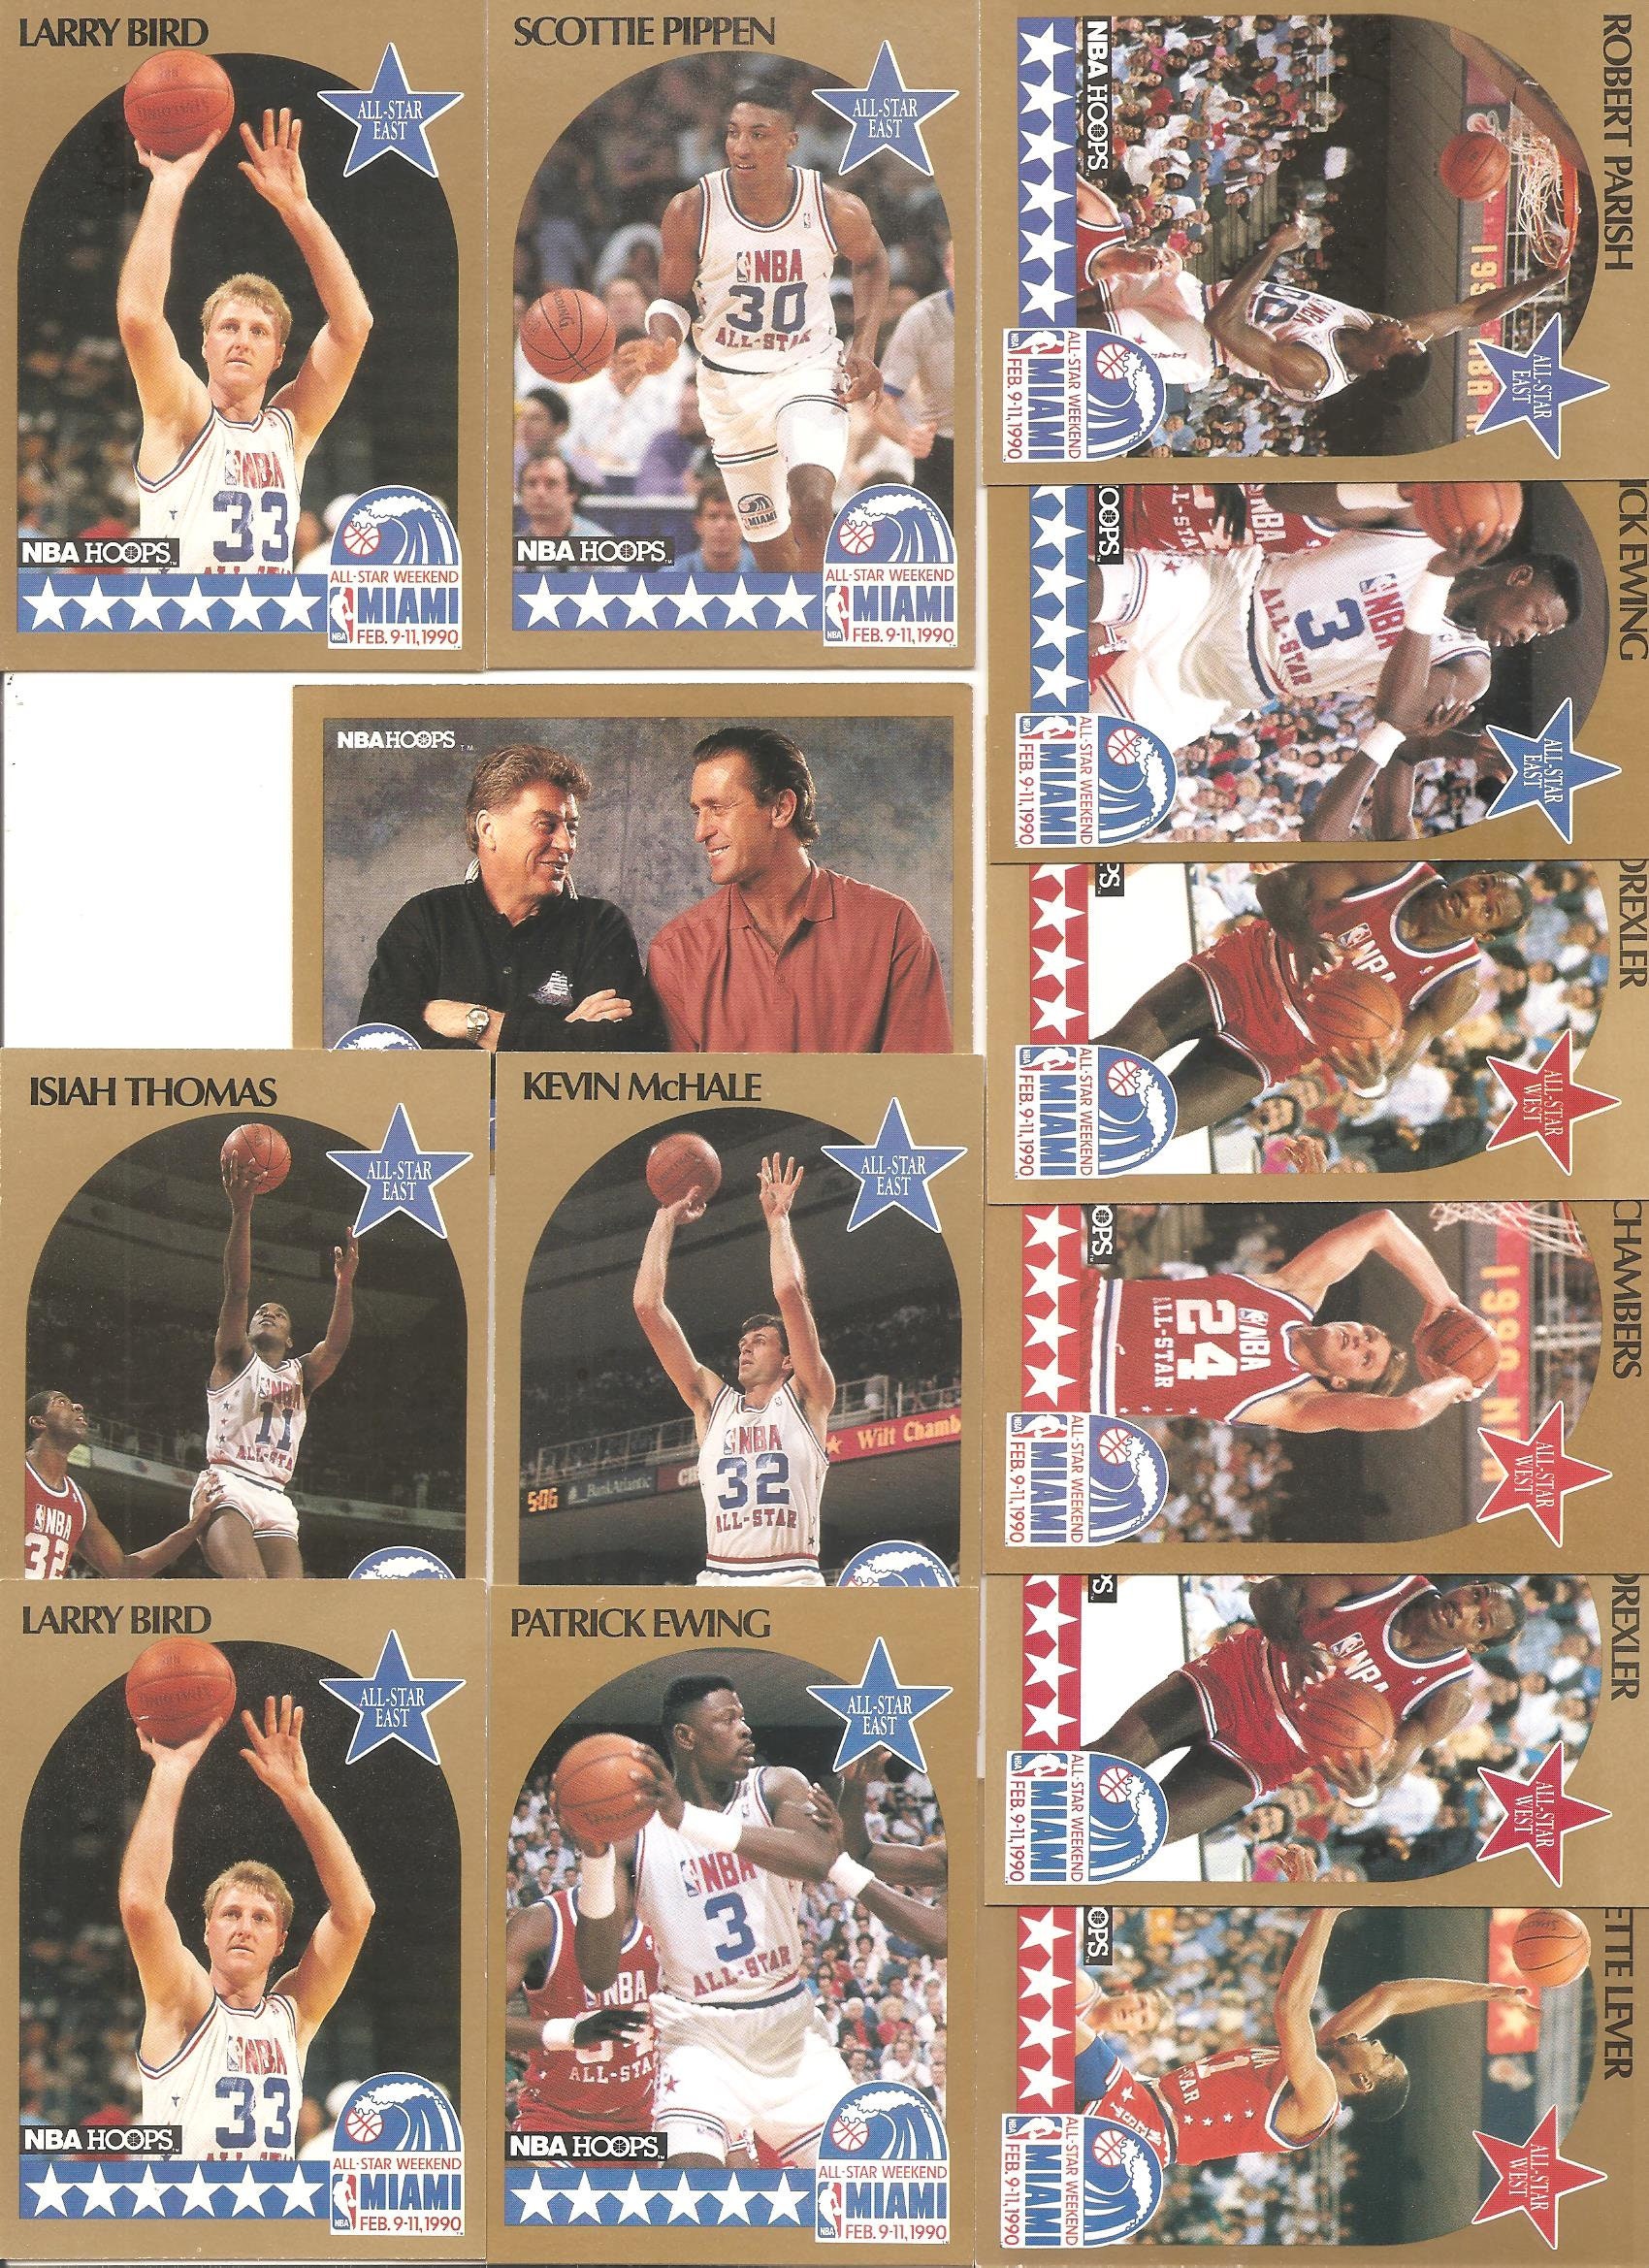 Vintage 1998 NBA All Star Game NY Knicks Madison Square Garden Basketball  TShirt